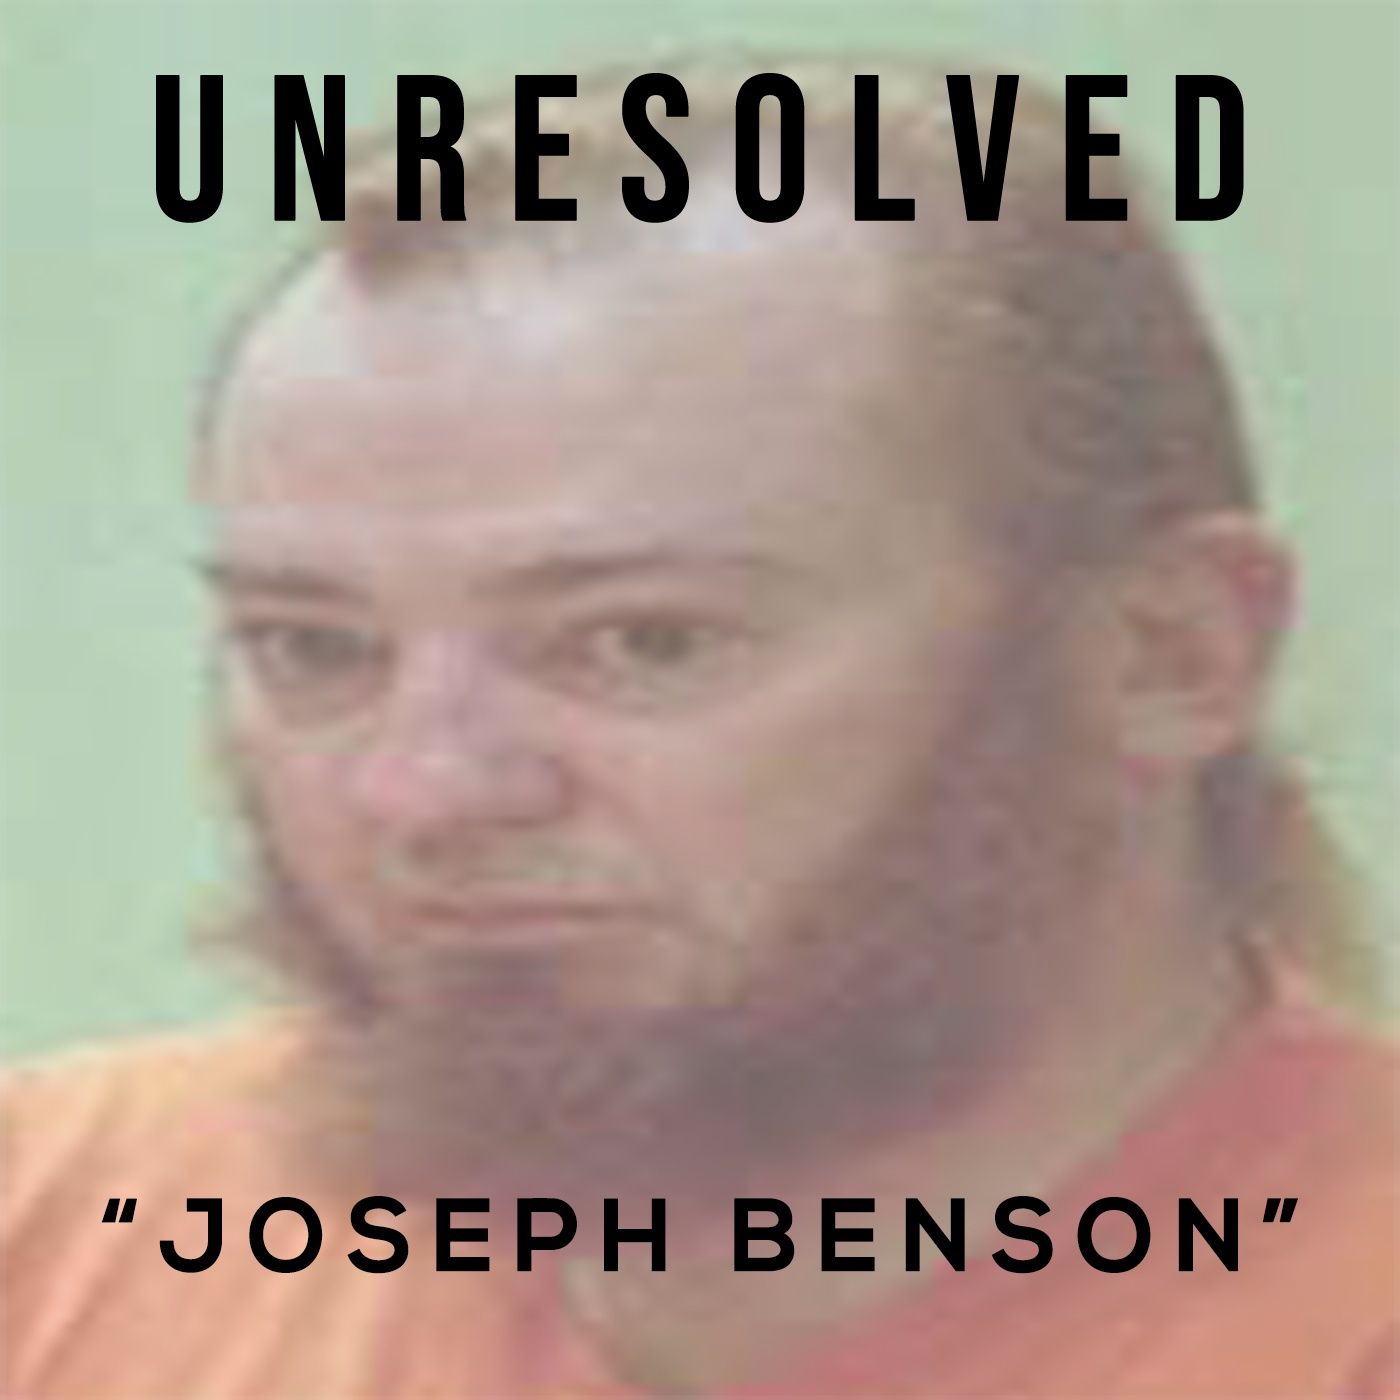 "Joseph Benson"